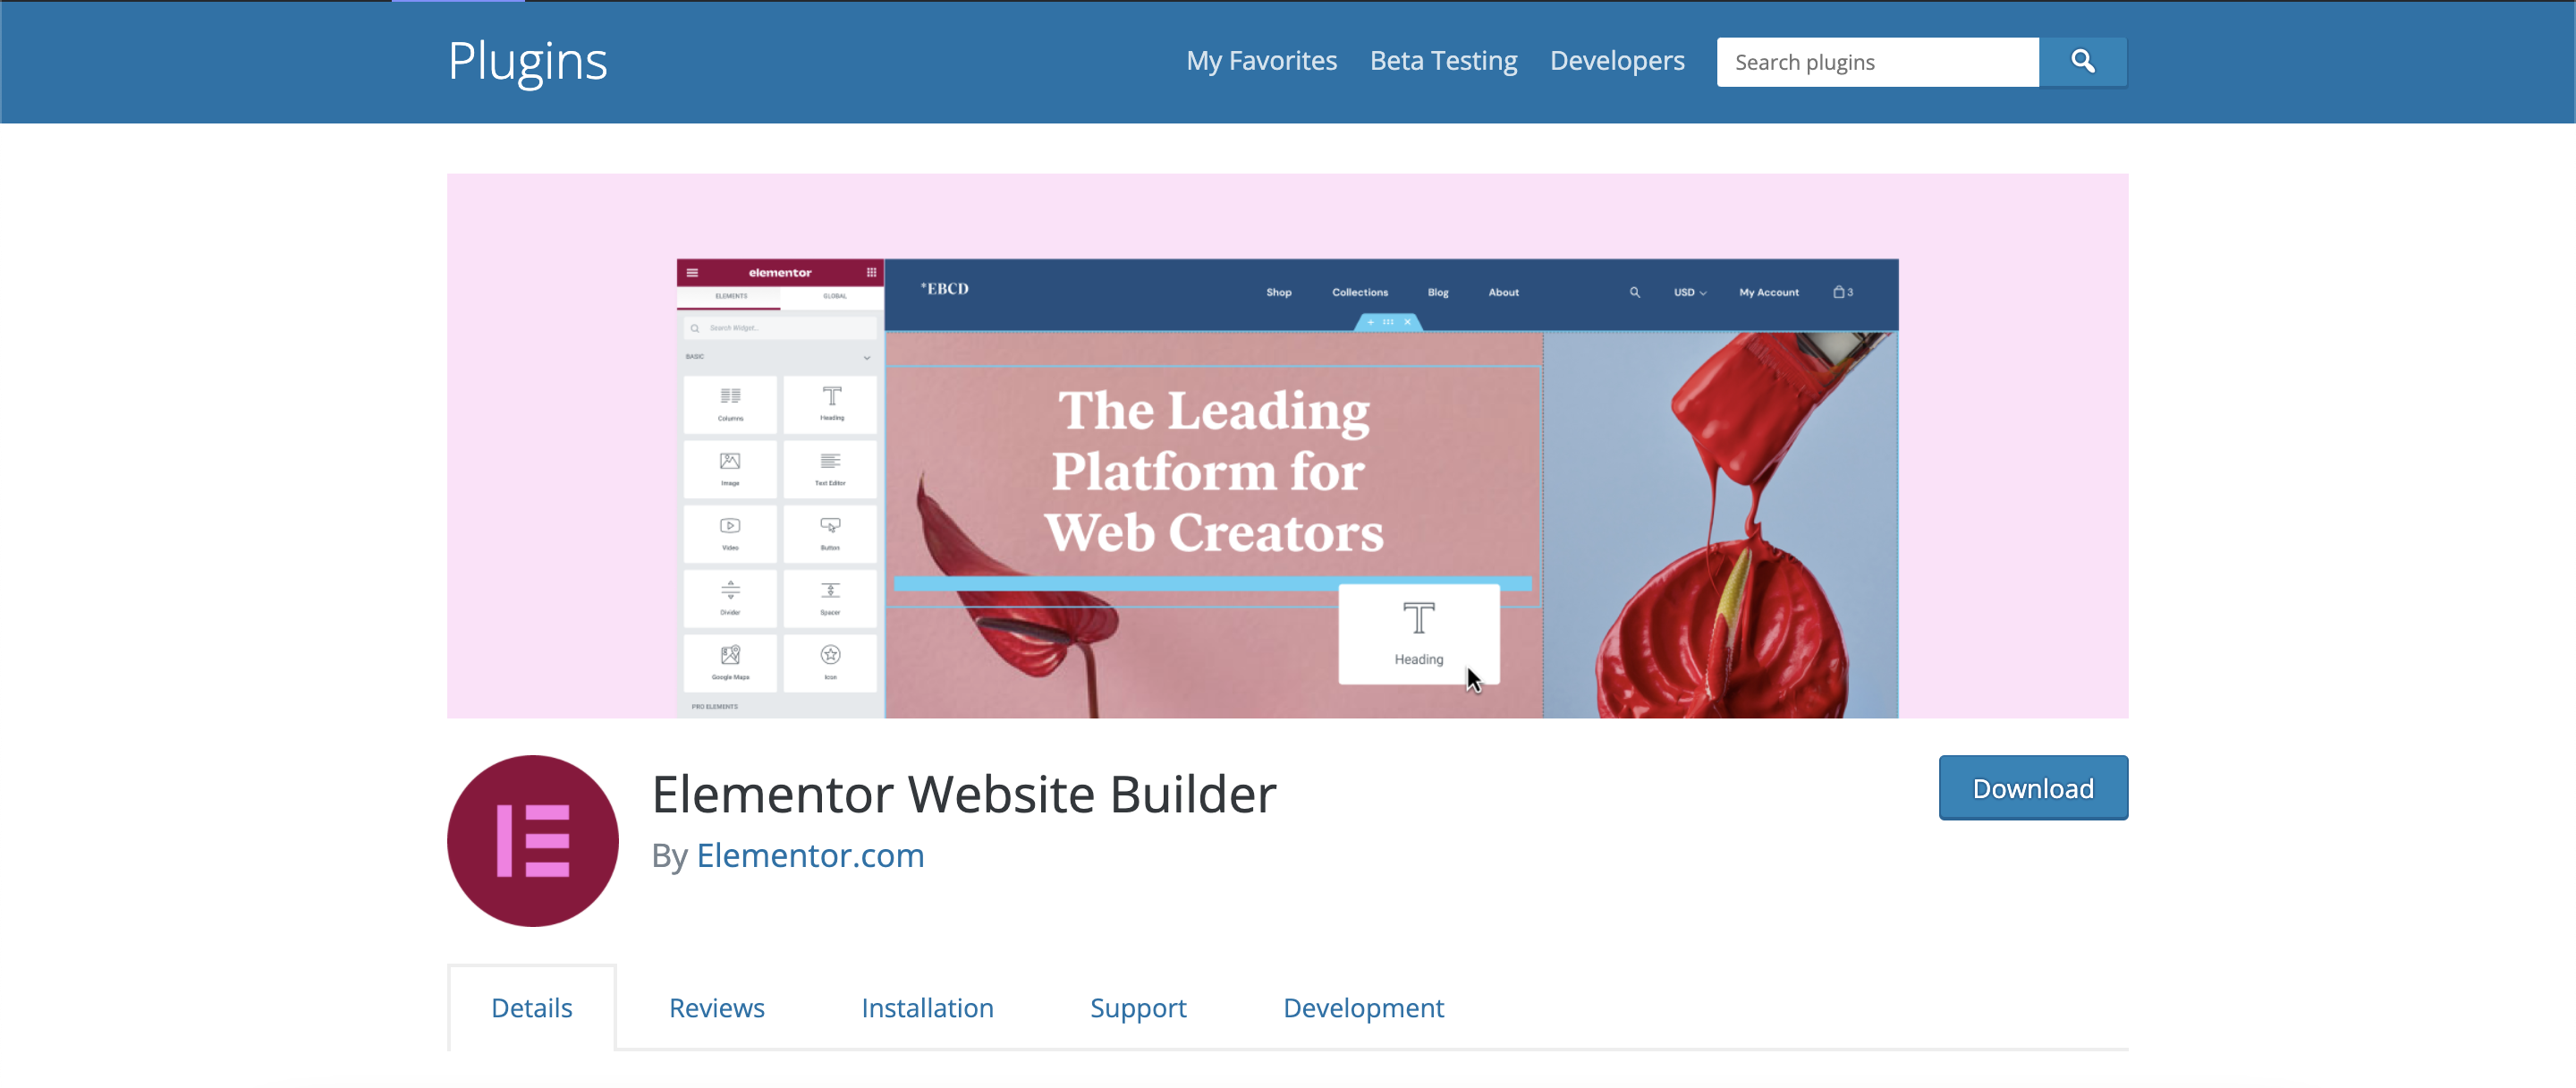 Elementor website builder plugin in the WordPress plugins library